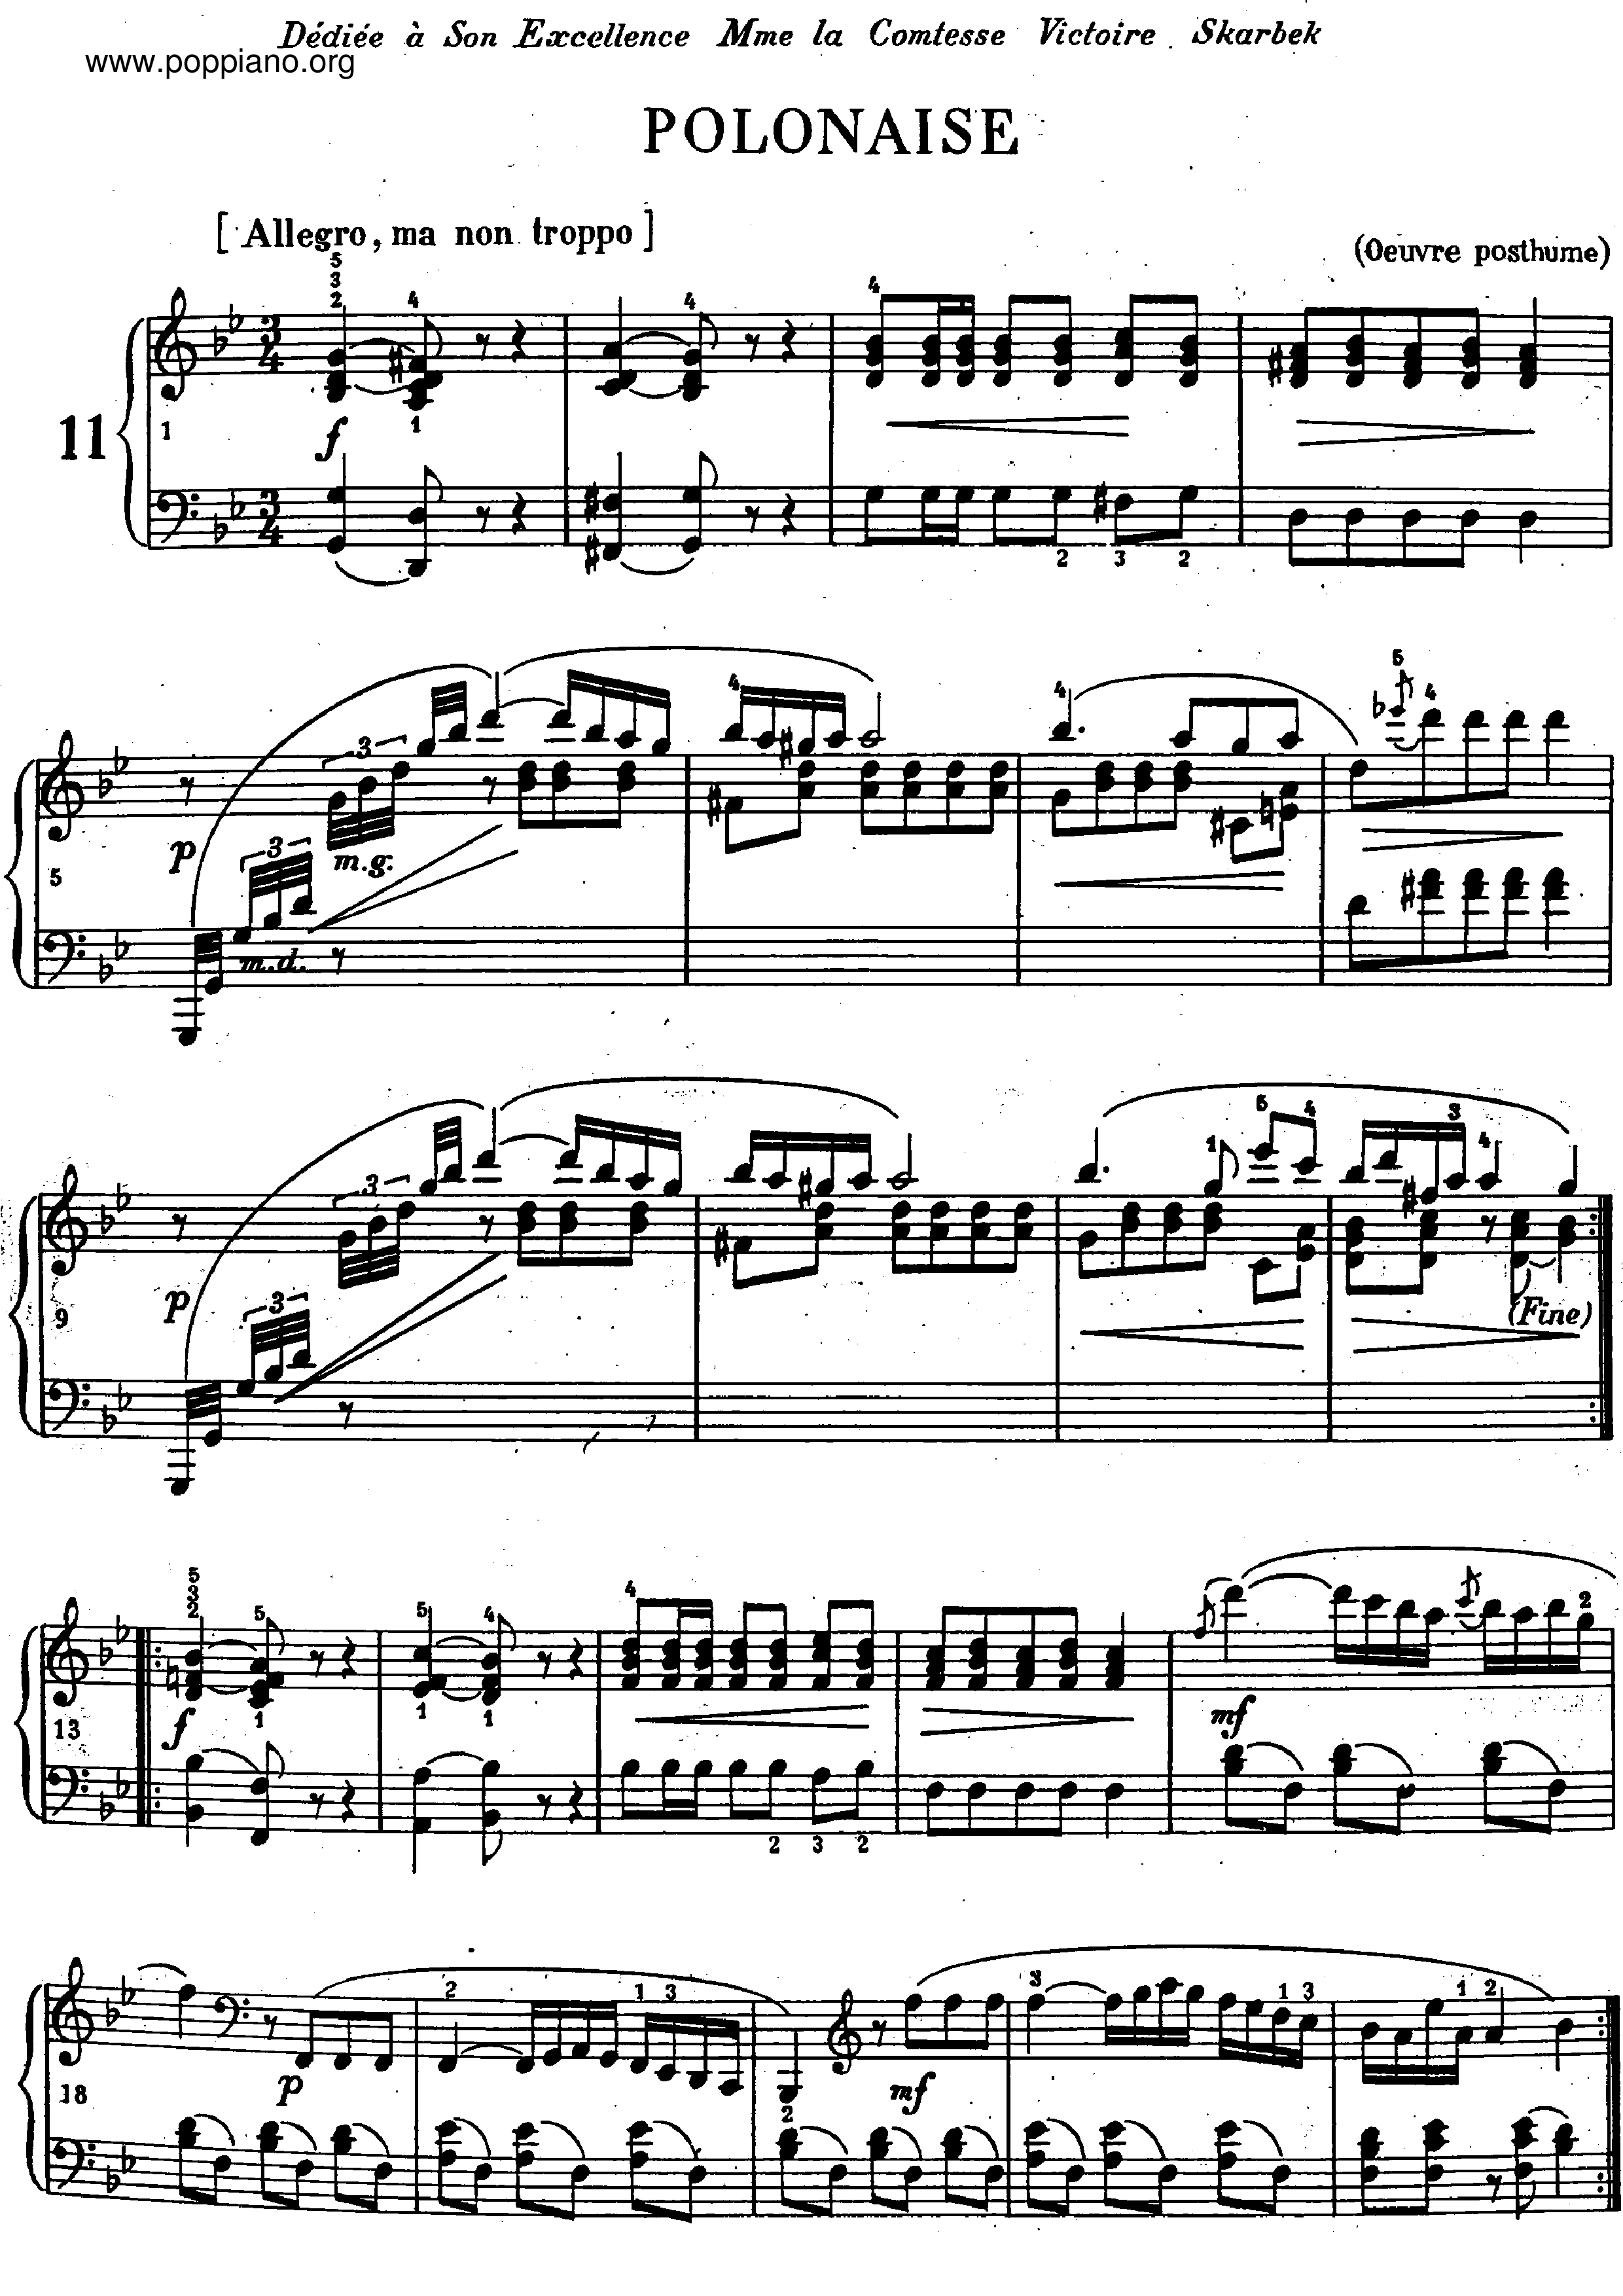 Polonaise in G minor Score